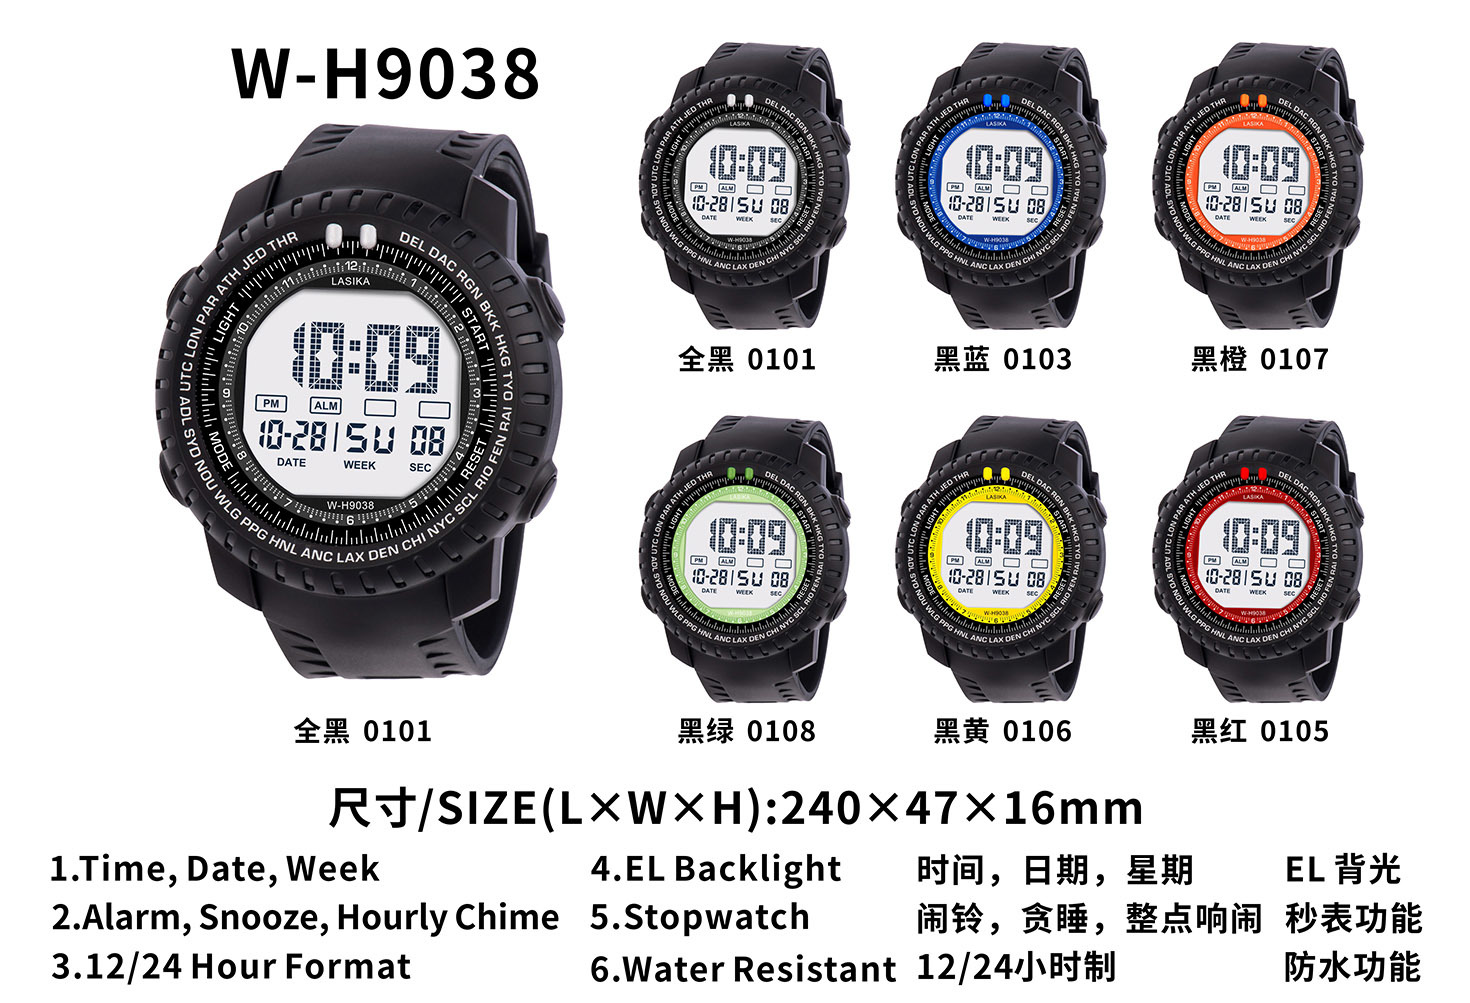 LASIKA Men's Digital Sports Watch Waterproof Tactical Watch with LED Backlight Watch for Men #9038